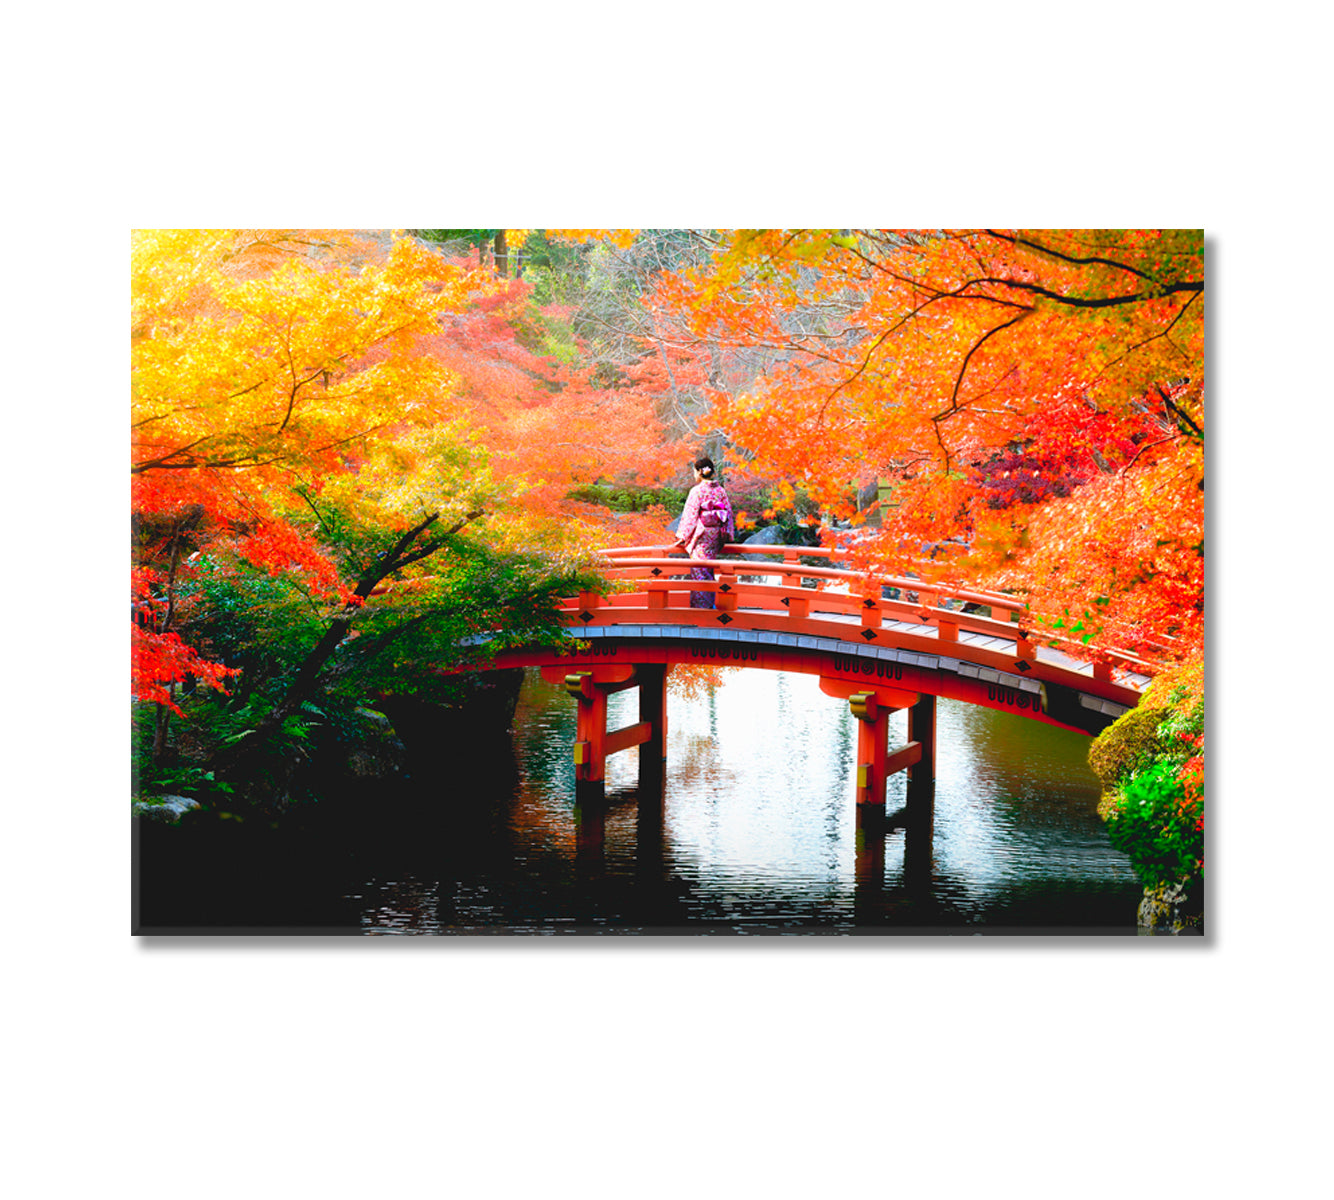 Wooden Bridge in Autumn Park Japan Canvas Print-Canvas Print-CetArt-1 Panel-24x16 inches-CetArt